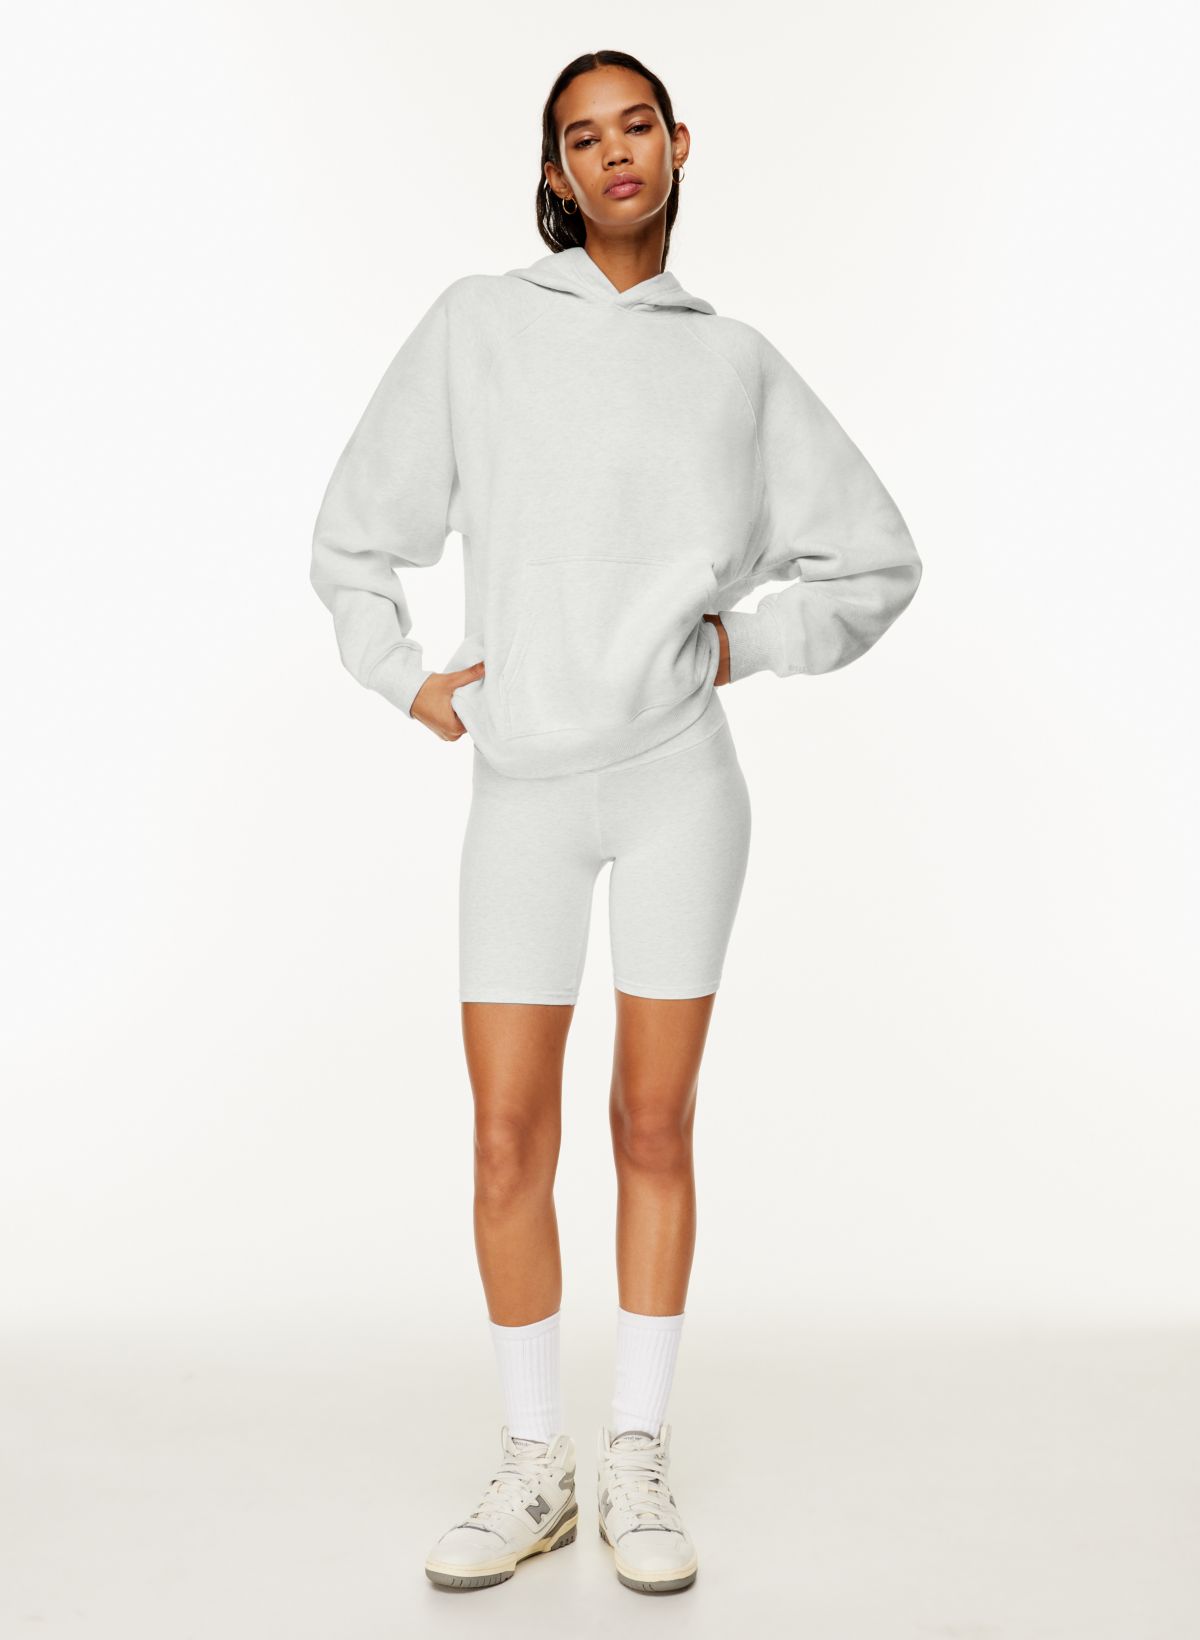 Women's Nike Heather Charcoal Las Vegas Raiders Fleece Raglan Hoodie Dress Size: Extra Large